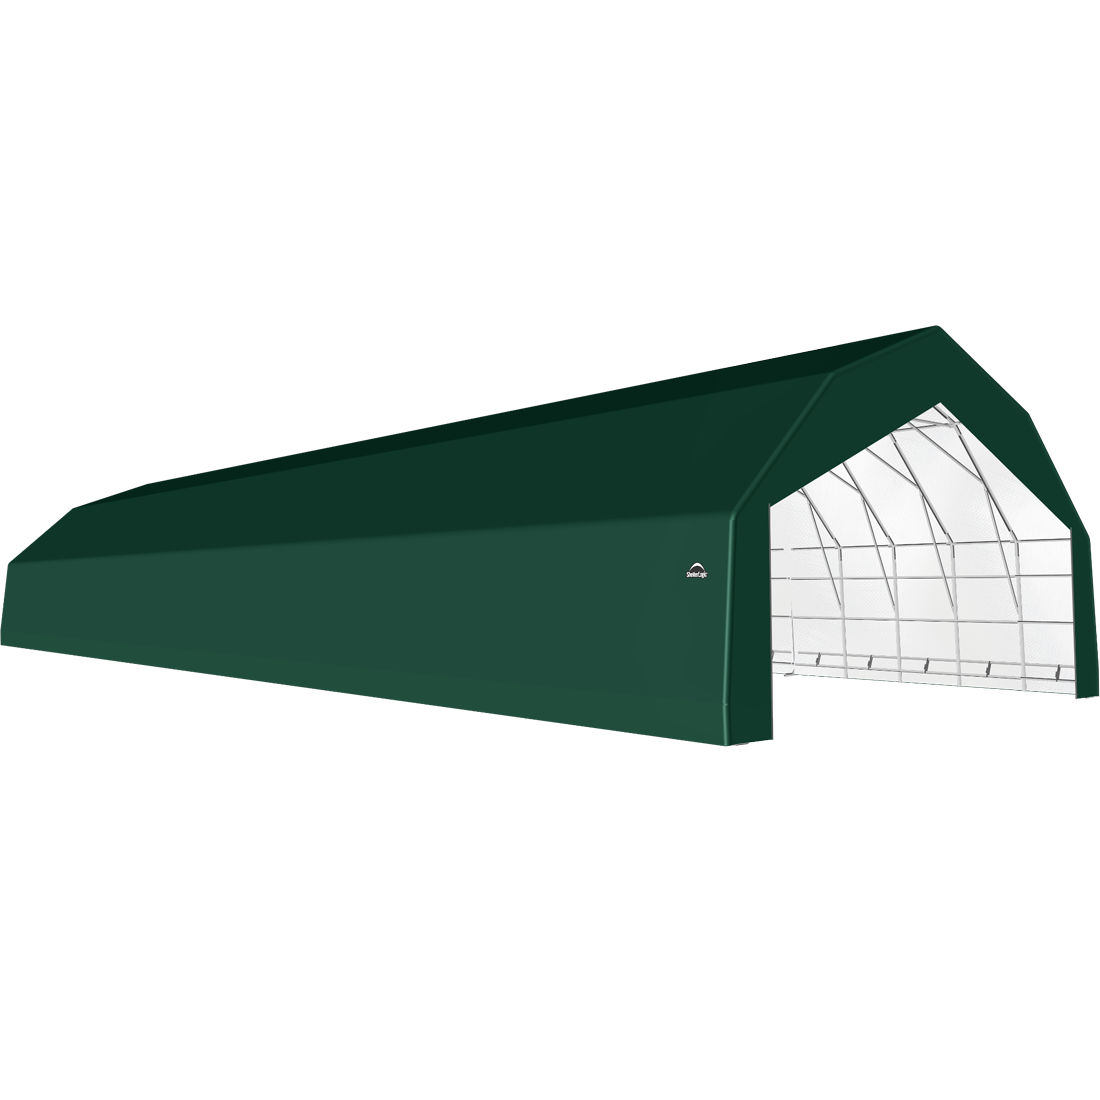 ShelterTech SP Series Barn Shelter, 30 ft. x 96 ft. x 18 ft. Heavy Duty PVC 14.5 oz. Green